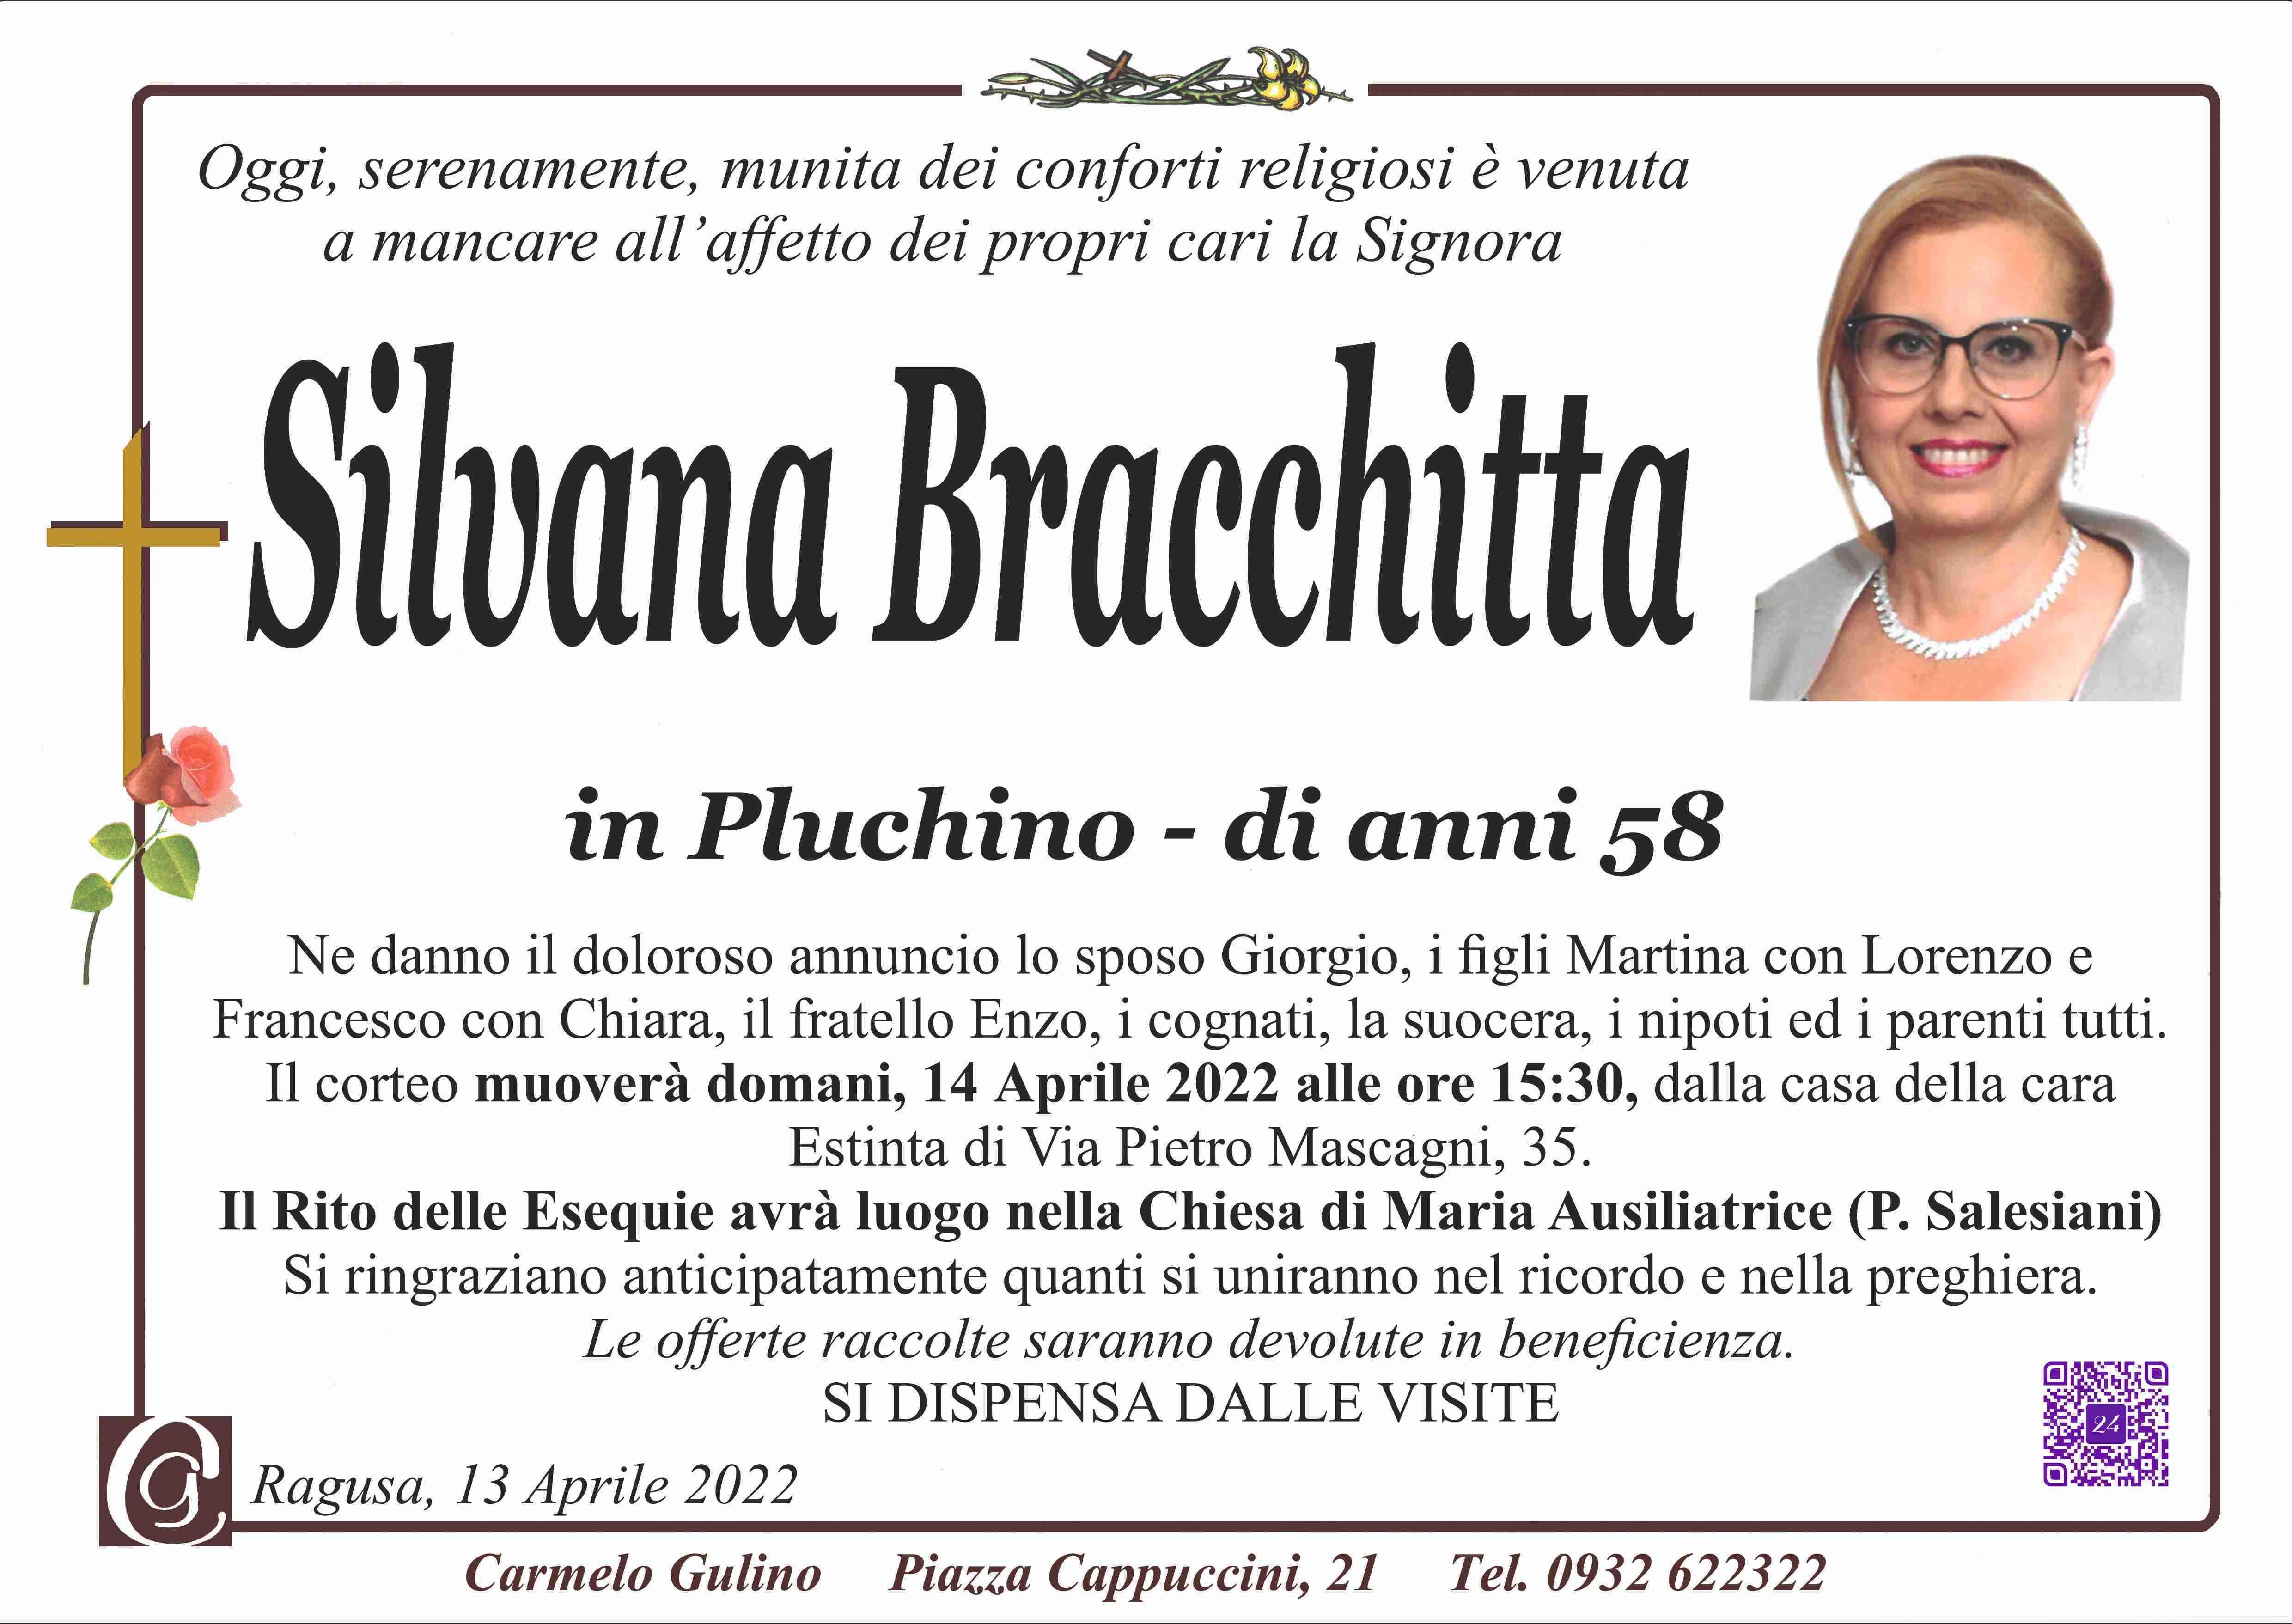 Silvana Bracchitta